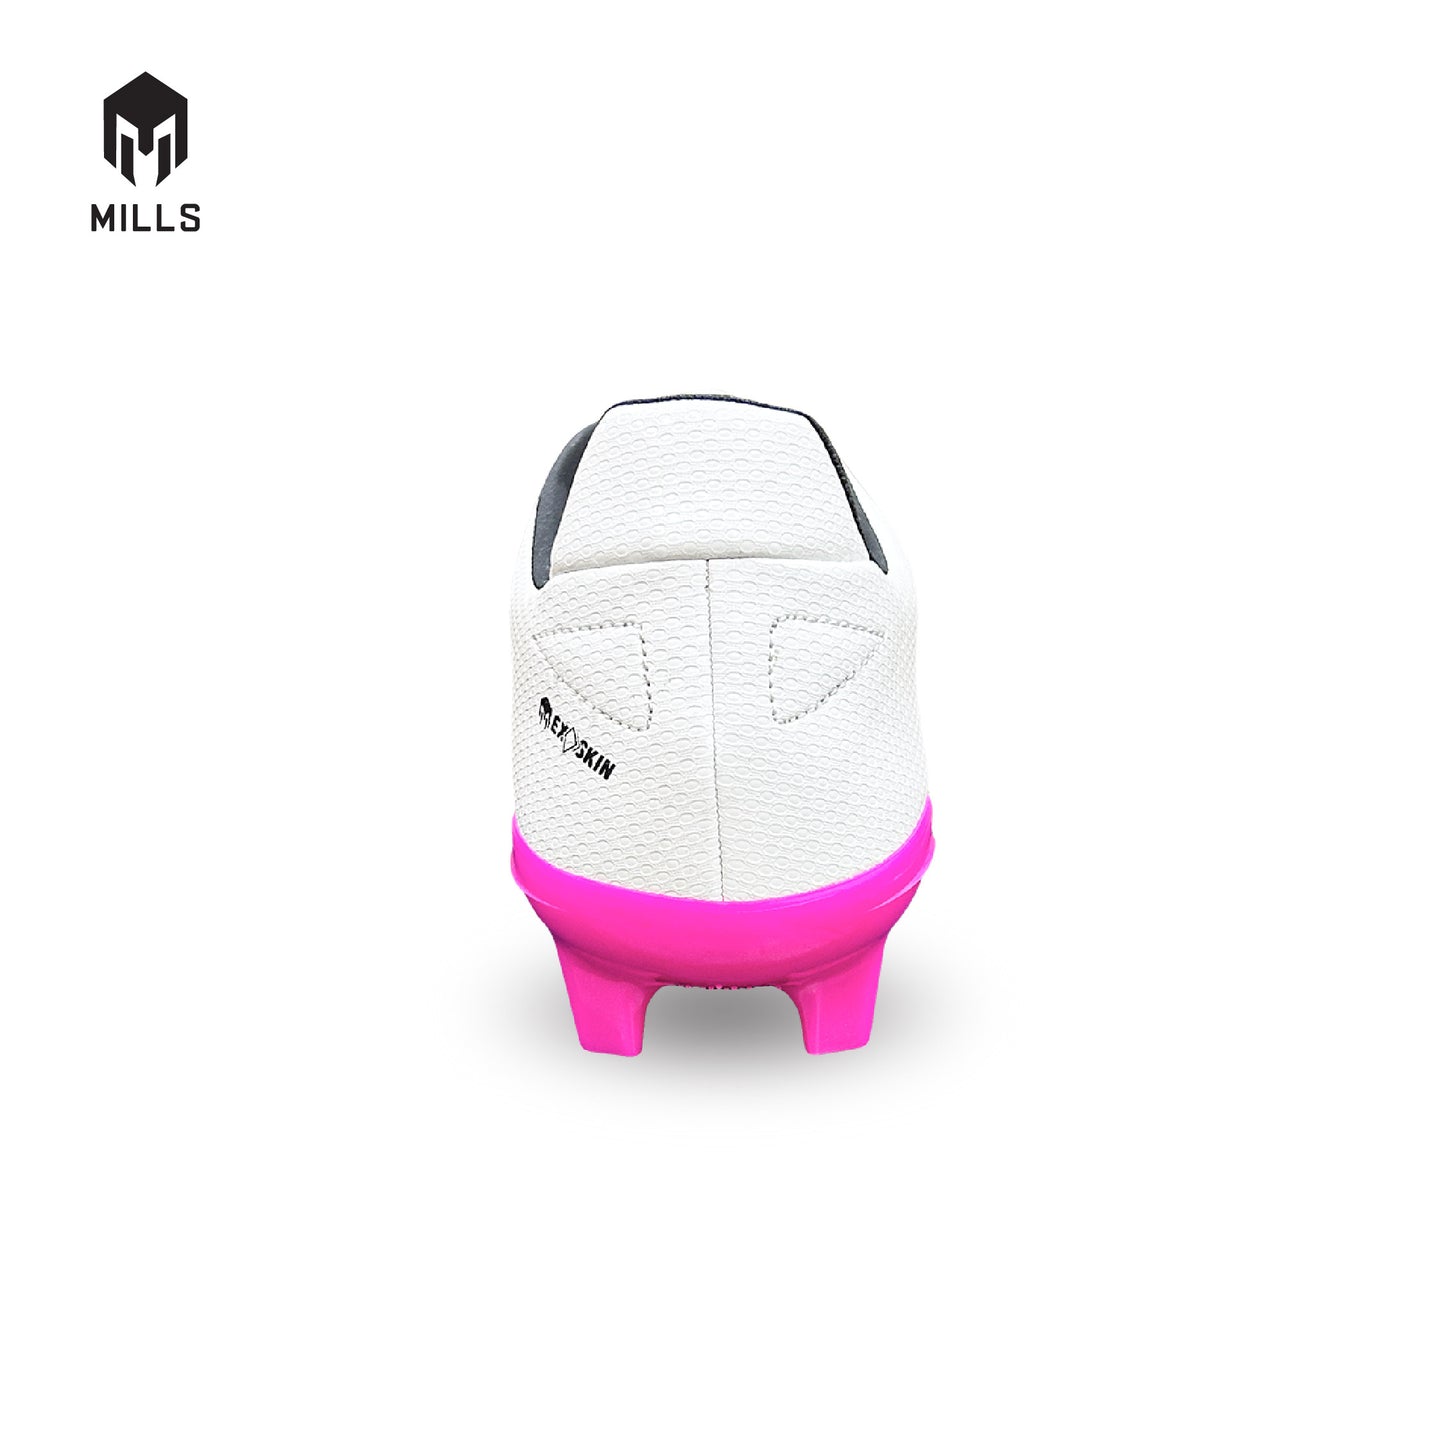 MILLS Sepatu Sepakbola Evos+ FG White / Magenta / Black 9300205